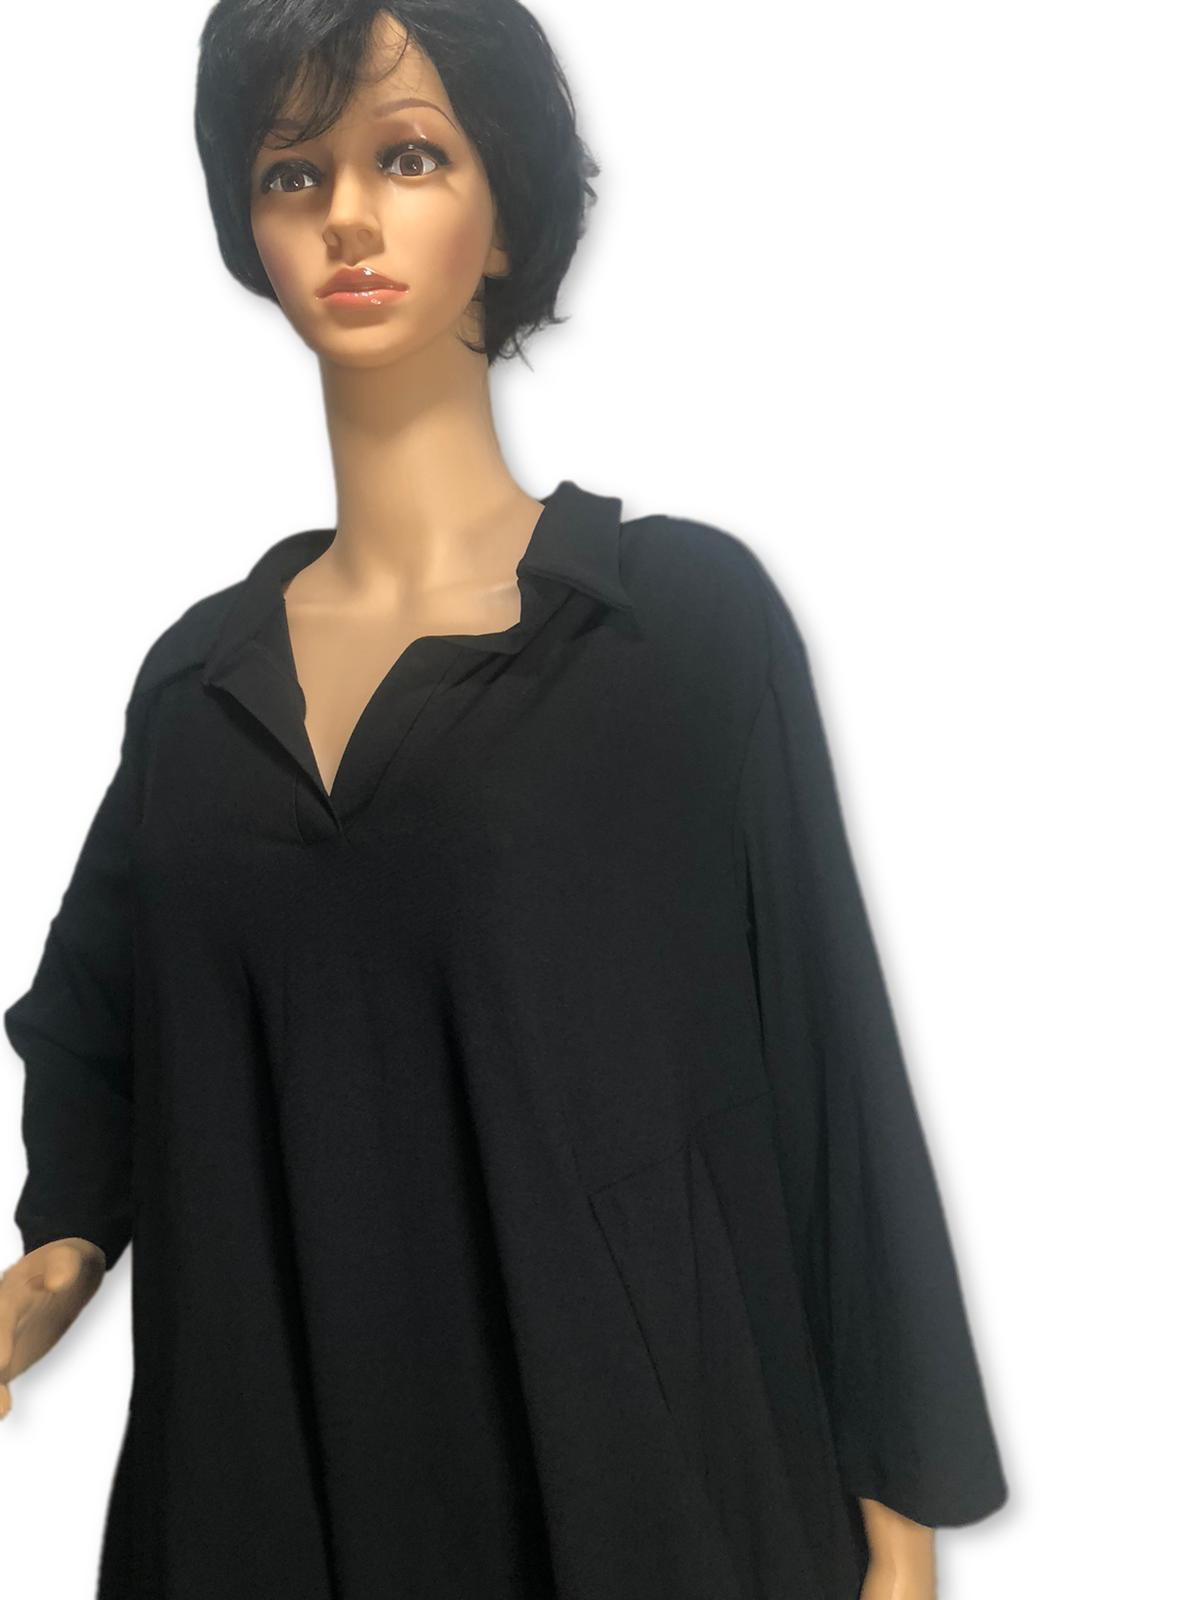 Women With Control Women's Petite Top Sz PM 3/4 Sleeve Tunic Black